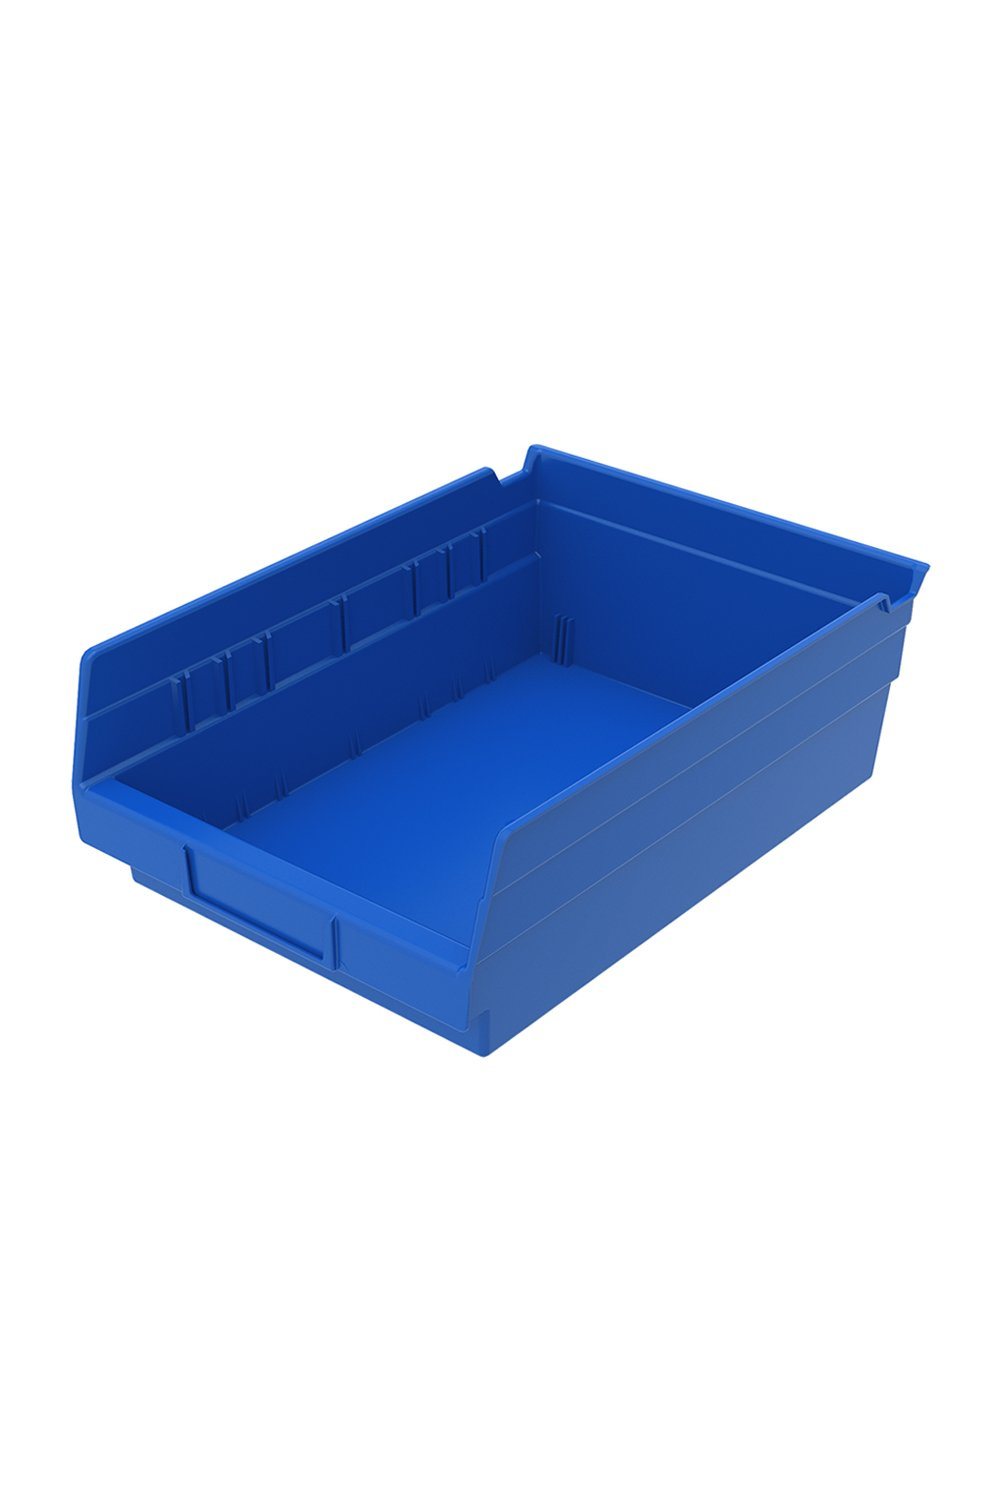 Shelf Bin for 12"D Shelves Bins & Containers Acart 11-5/8'' x 8-3/8'' x 4'' Blue 